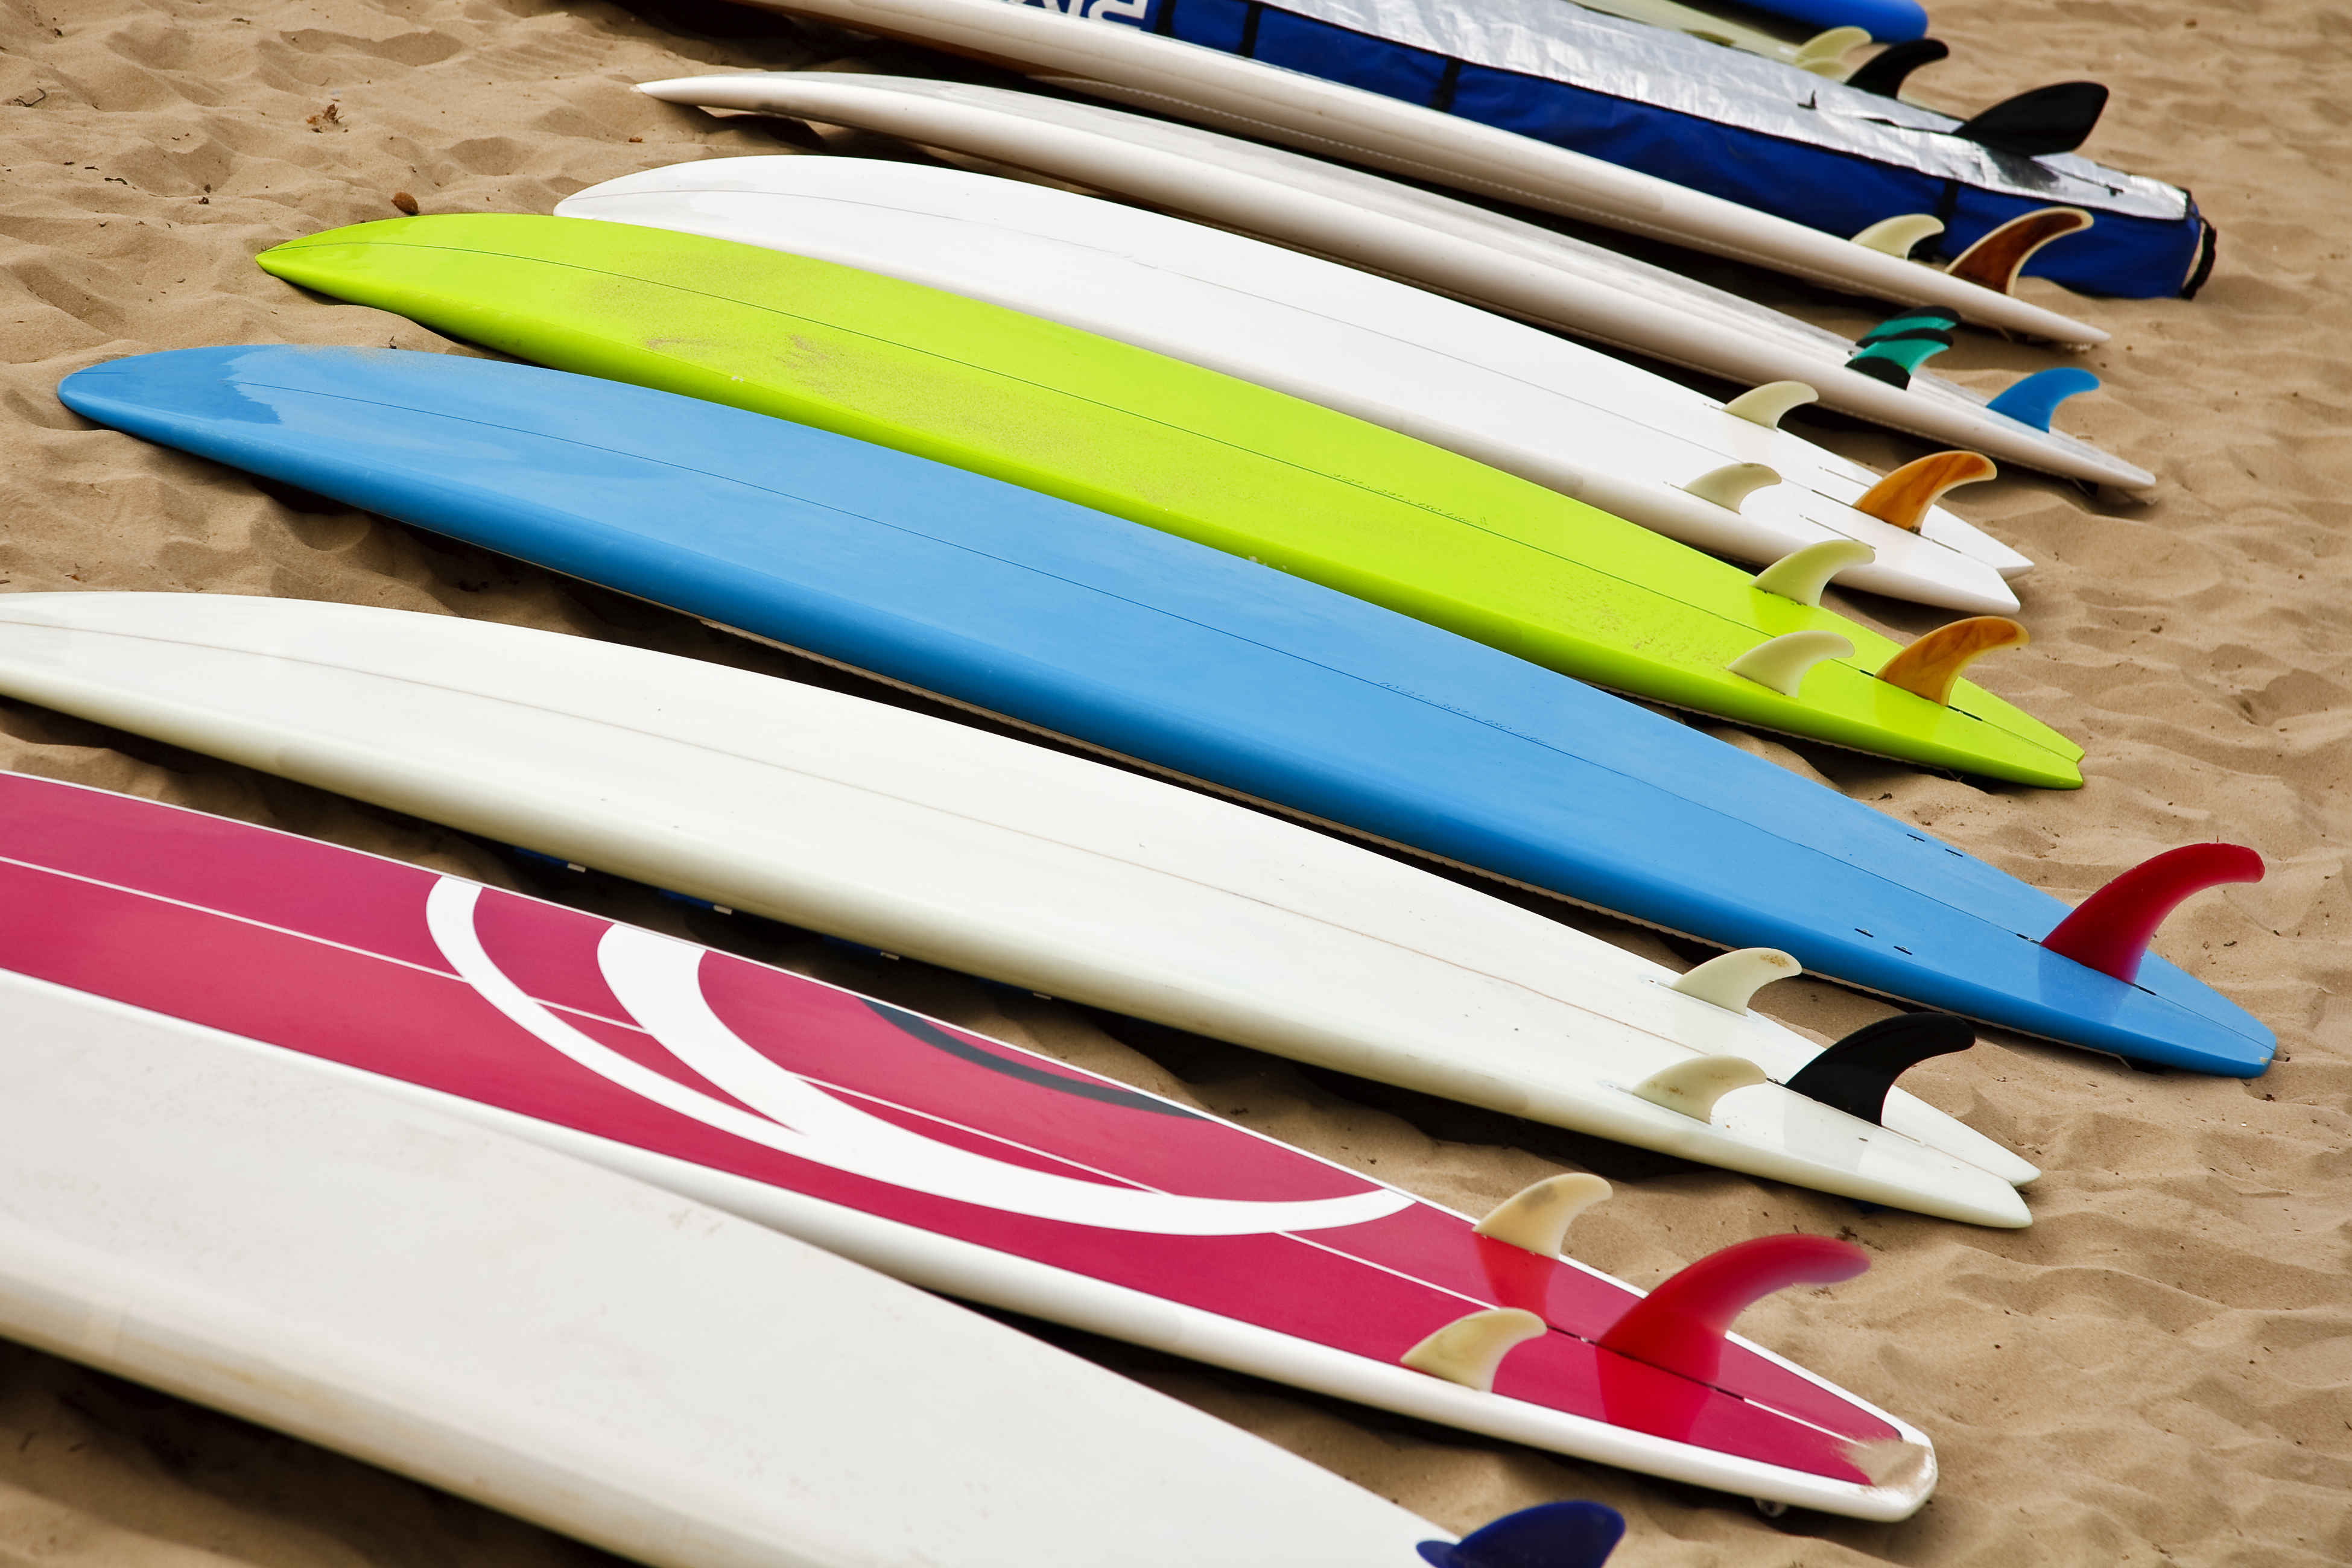 Surfboard Designs